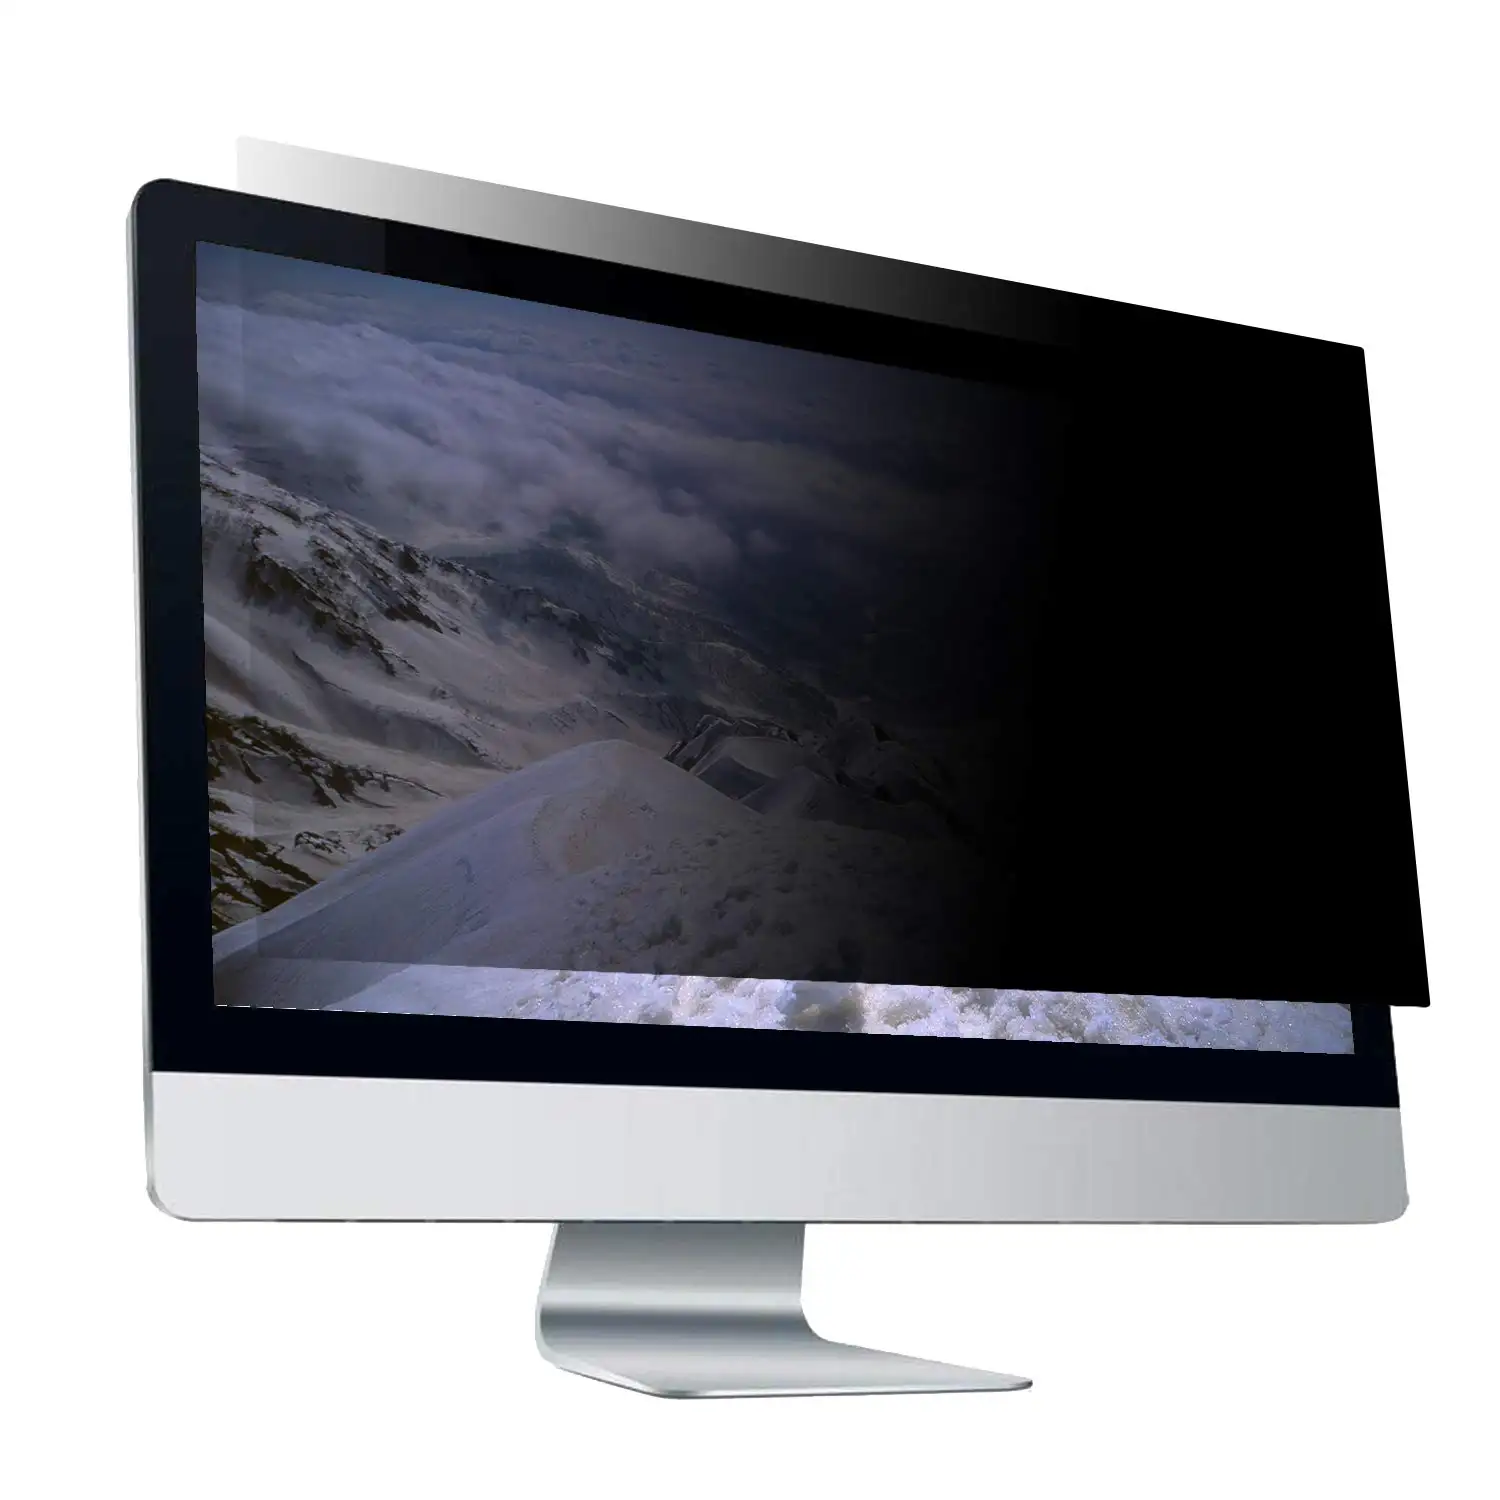 Protector de pantalla para ordenador portátil, pantalla táctil LCD antideslumbrante de 32 pulgadas para monitores de ordenador/TV, venta al por mayor